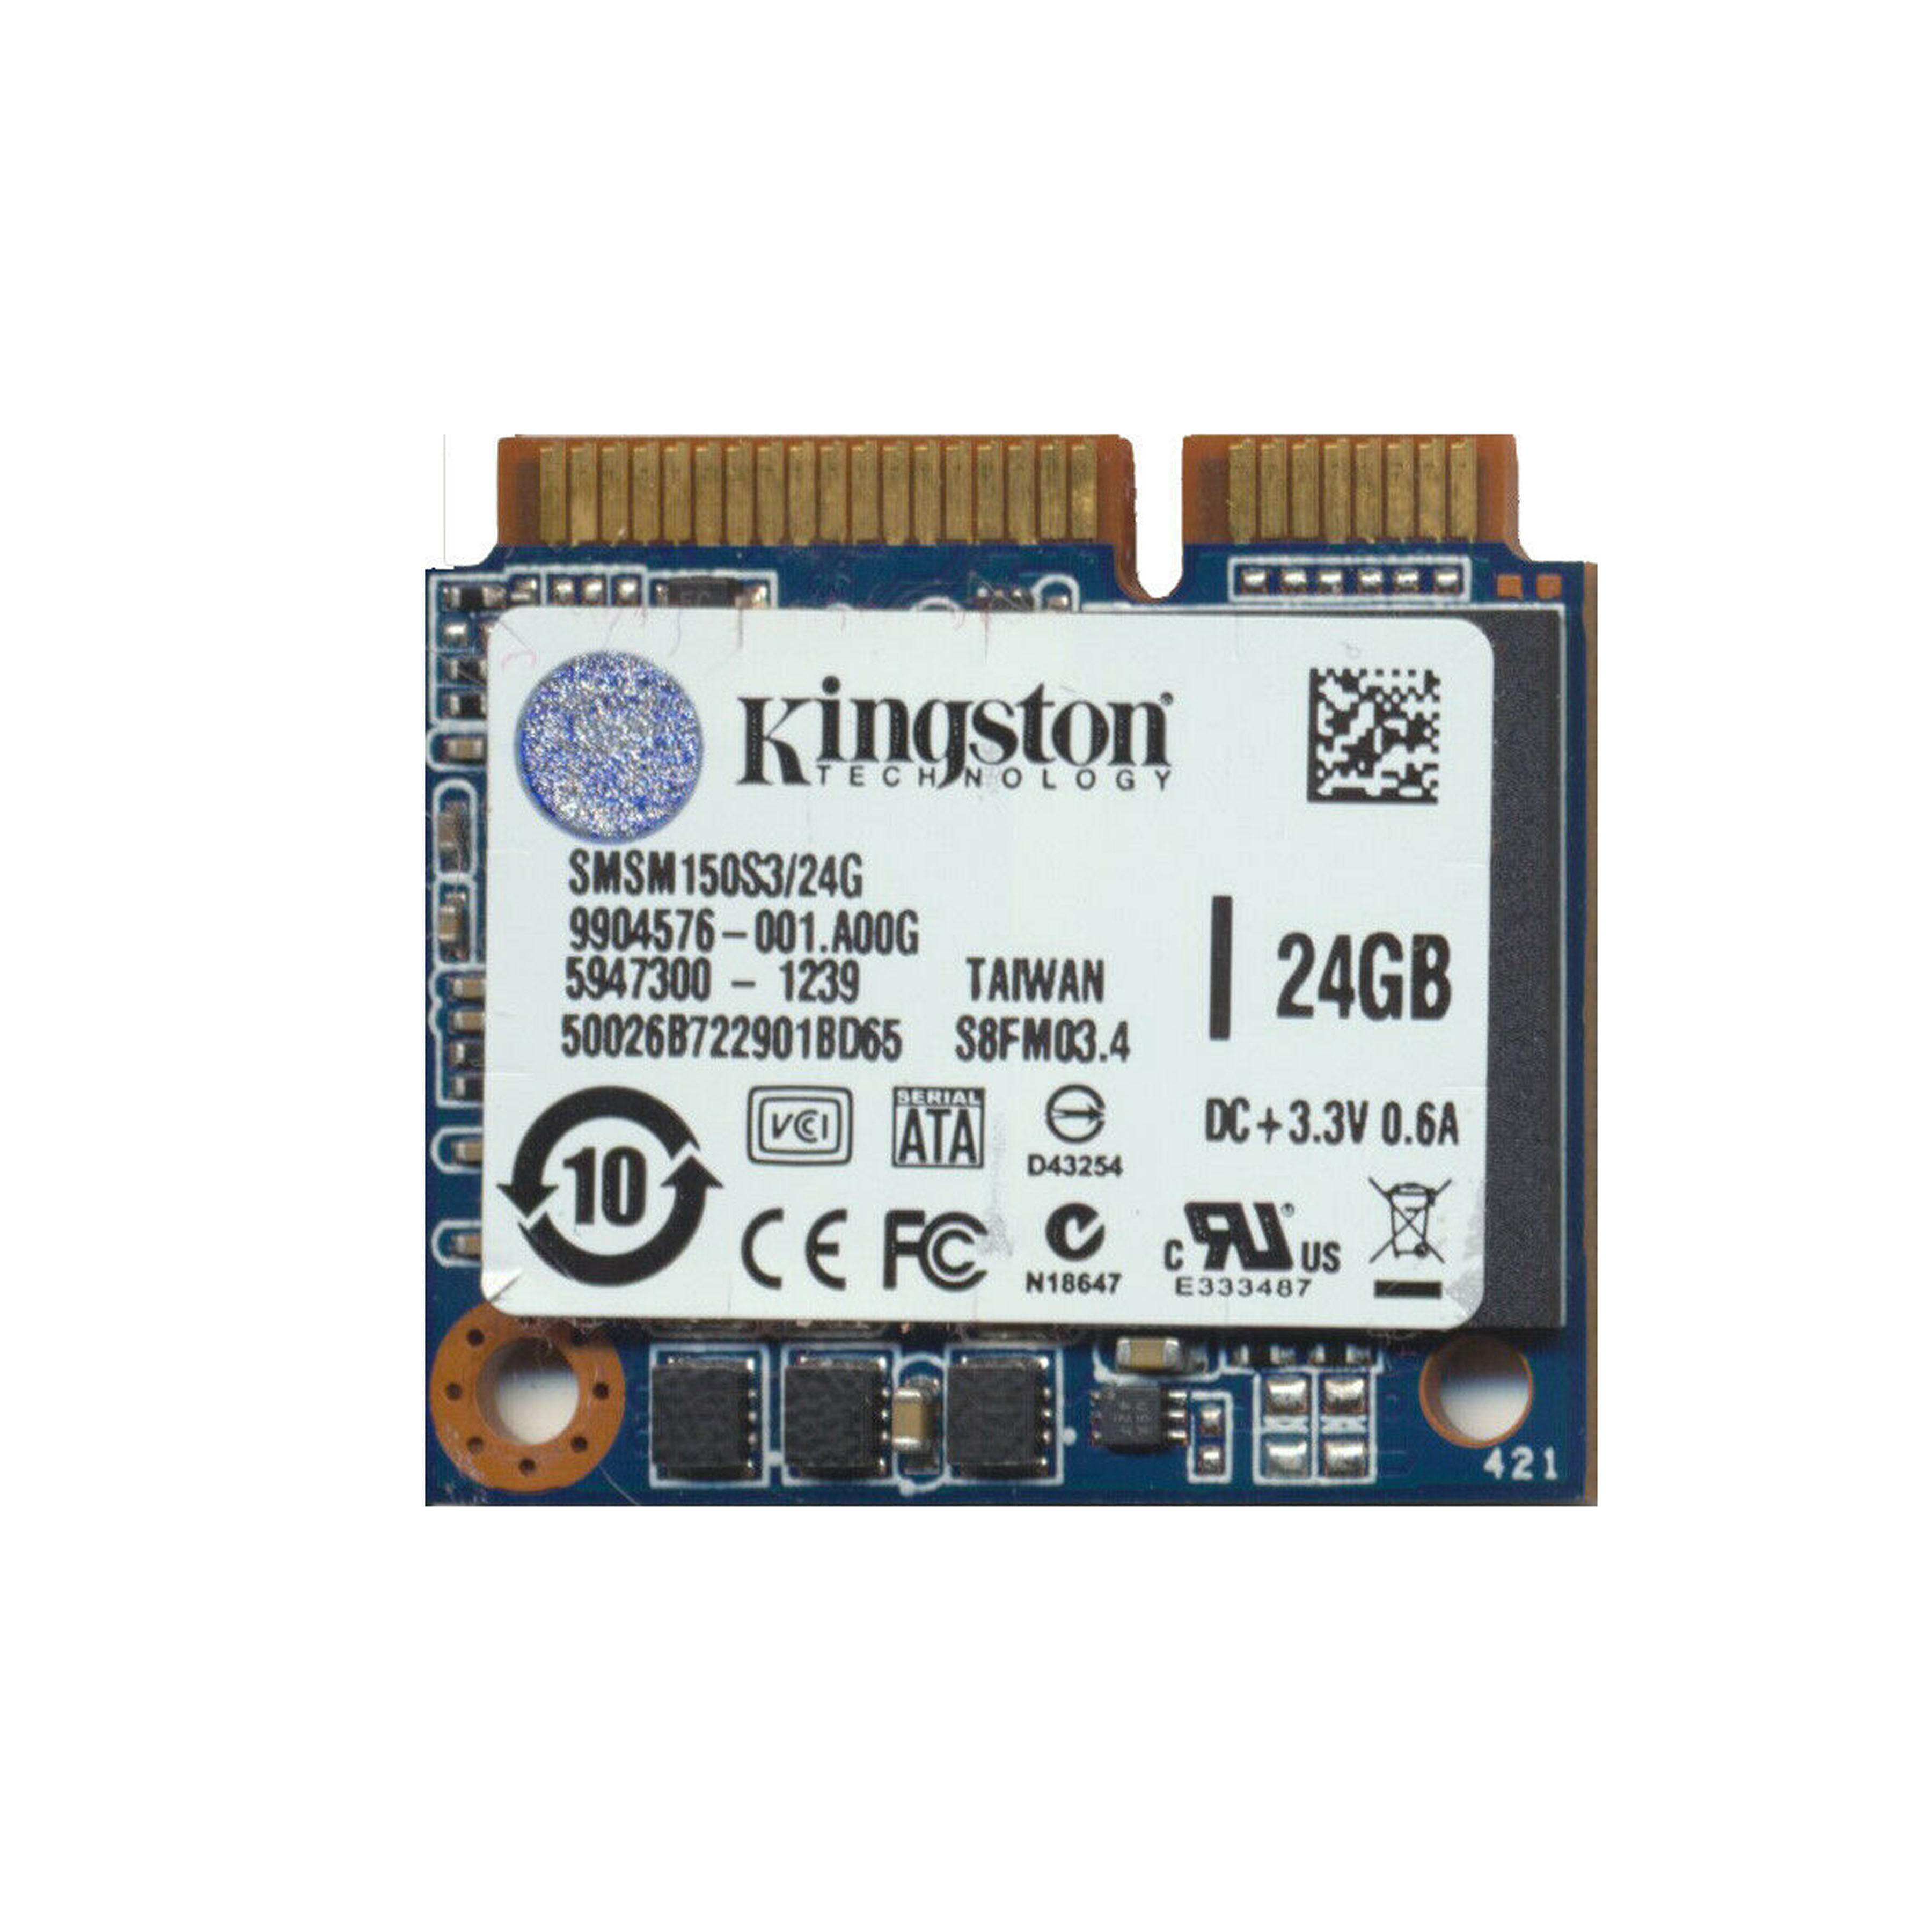 Occasion Kingston 24GB Msata SSD Kingston Smsm150s3/24g SSD Lecteur 